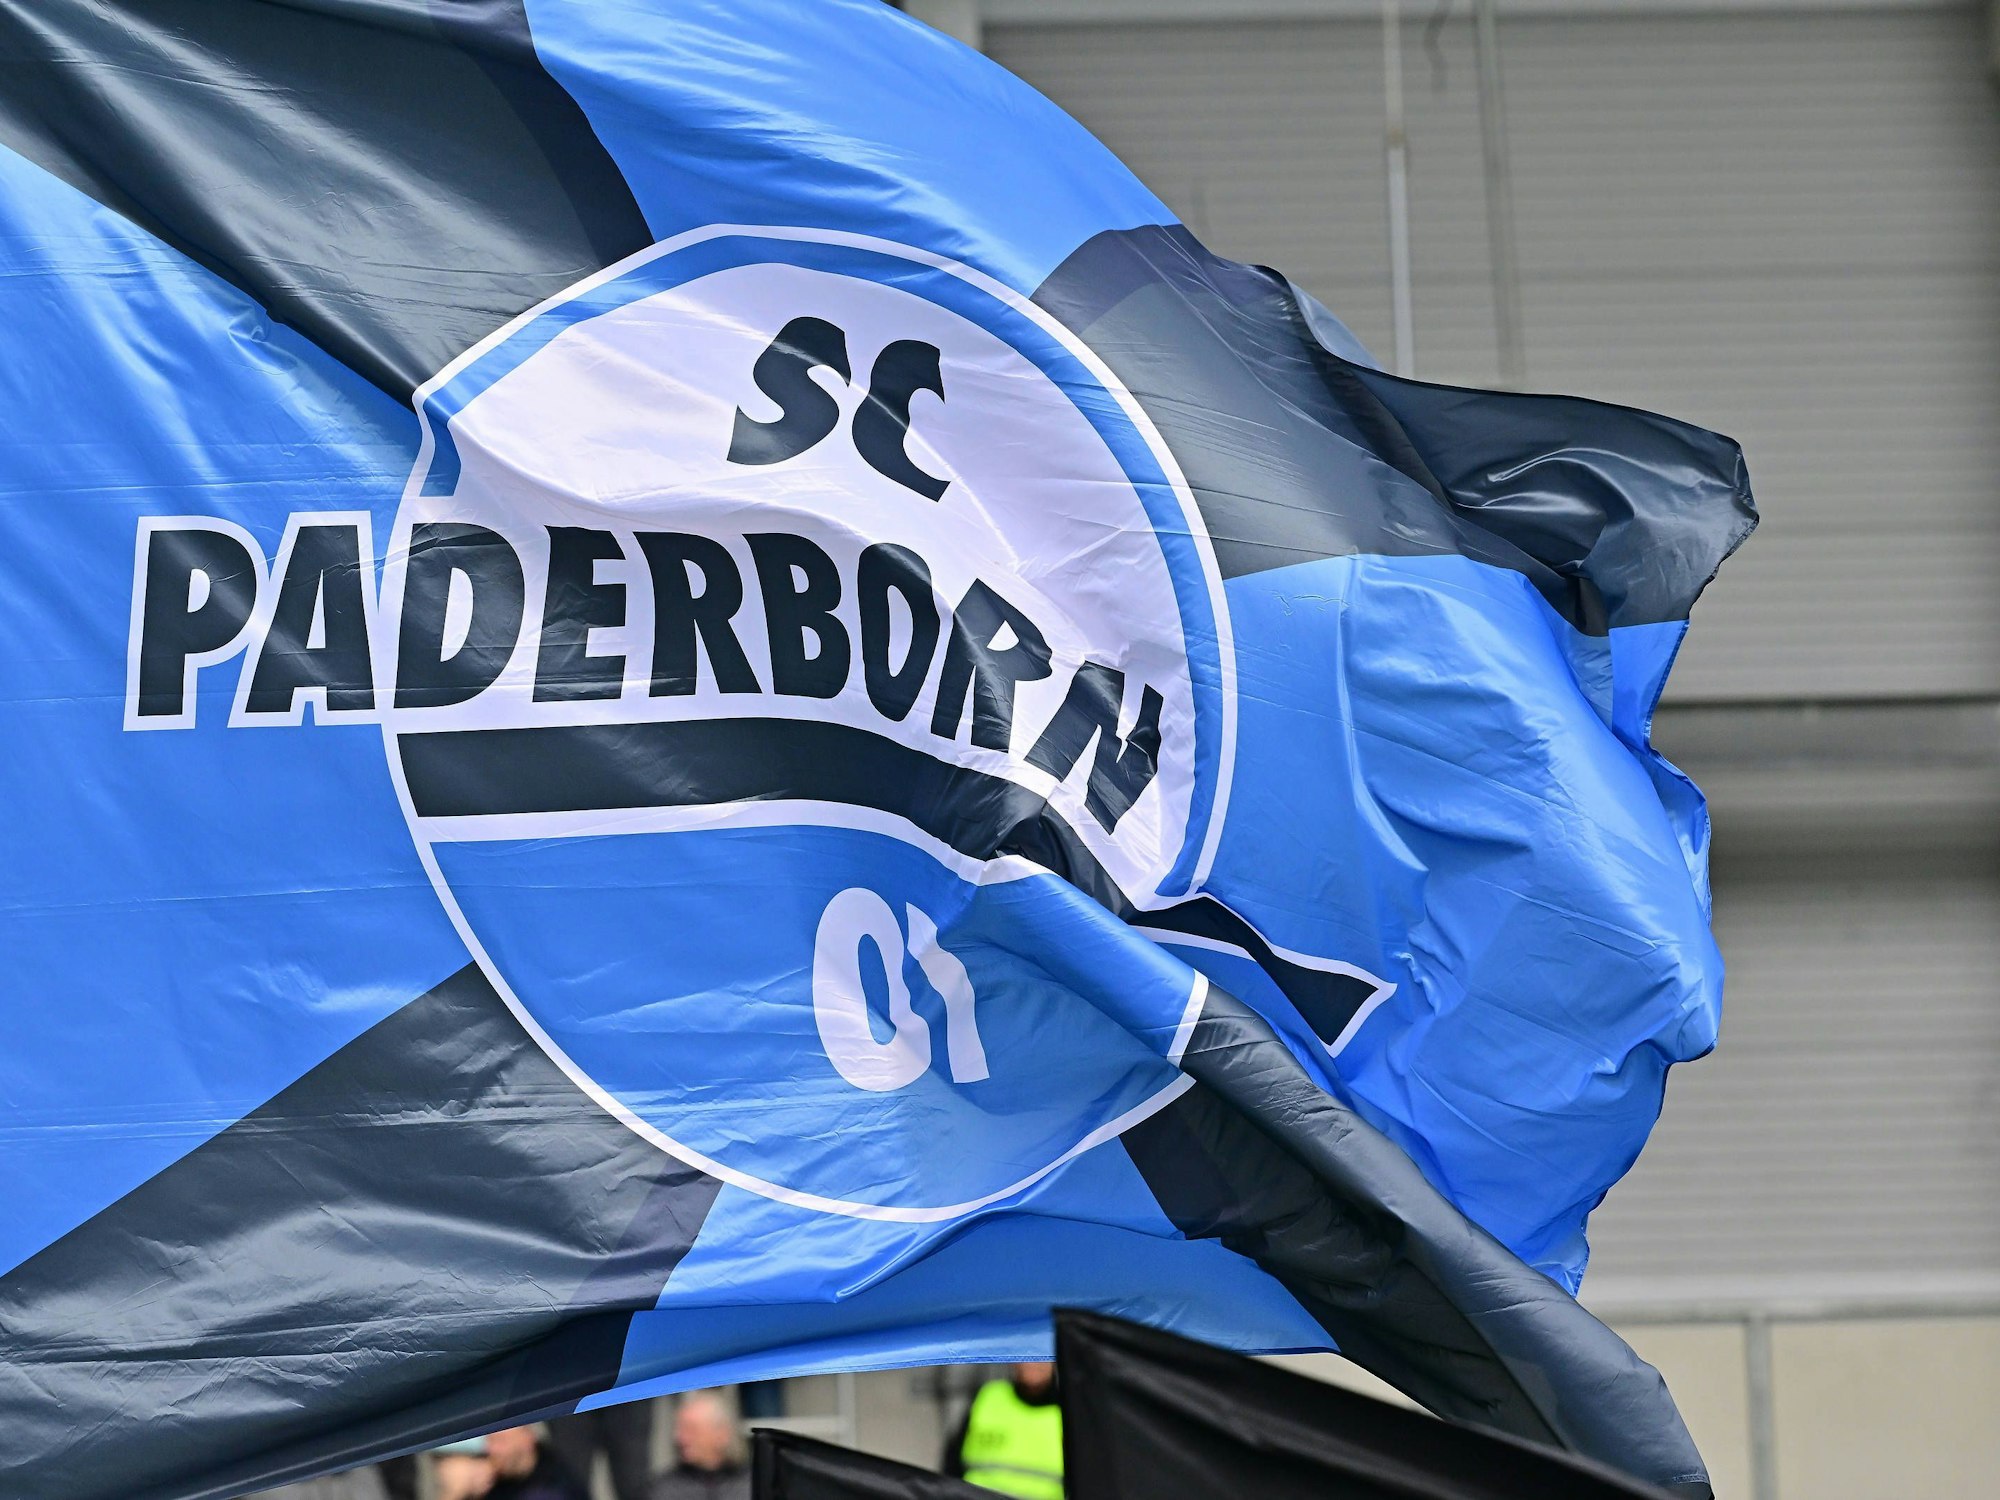 Fahne von Paderborn.